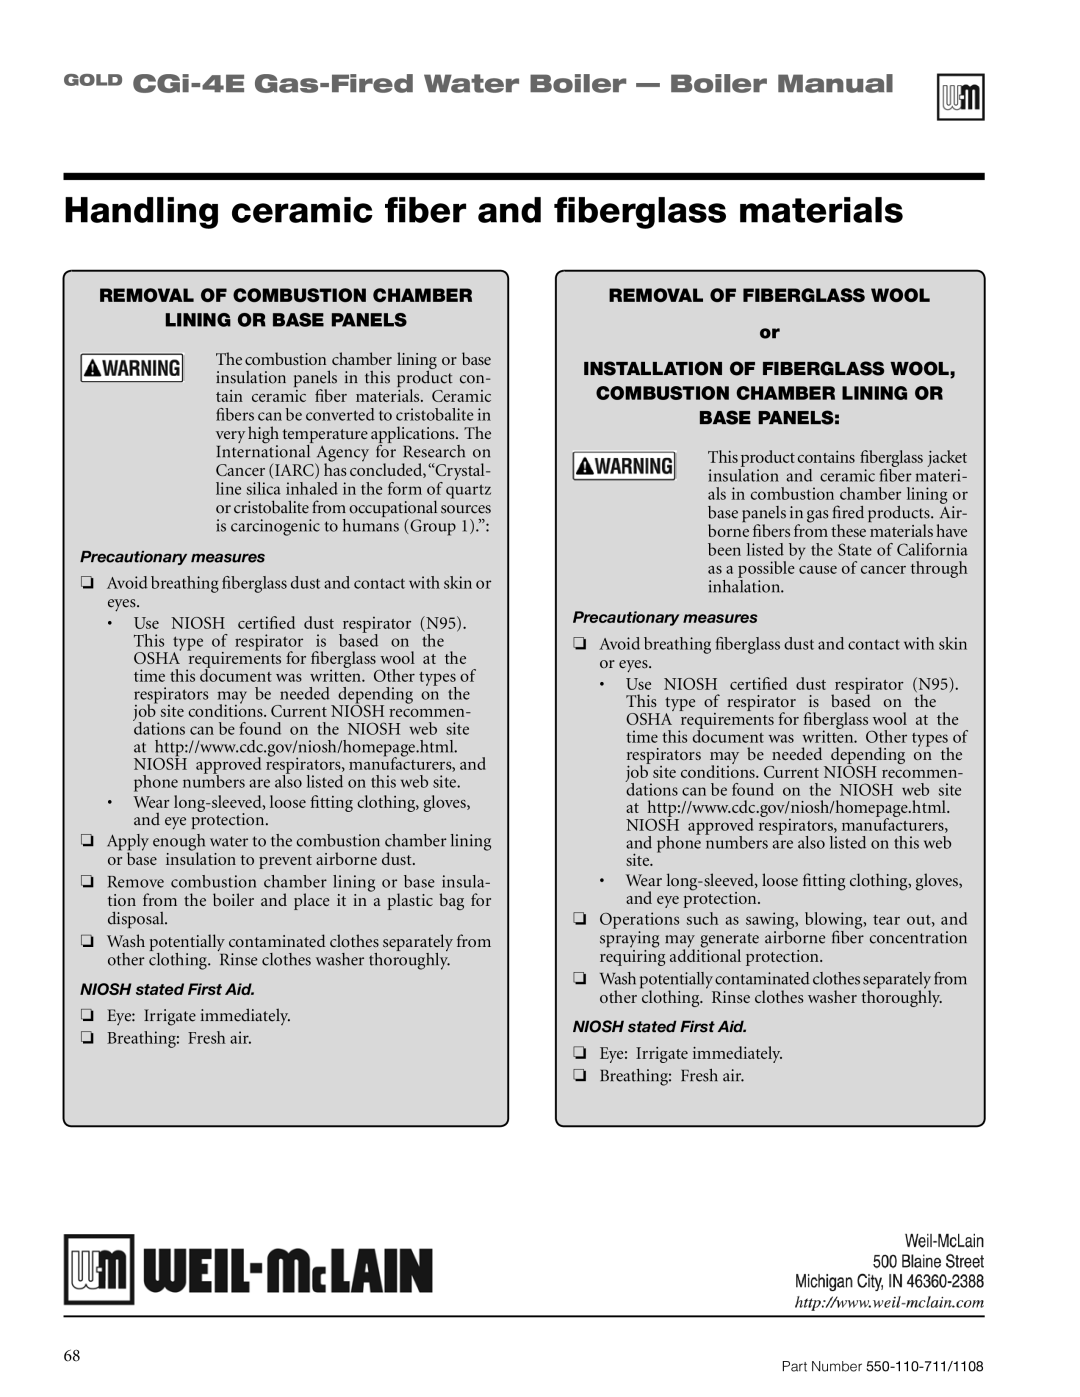 Weil-McLain CGI-4E Handling ceramic fiber and fiberglass materials, GOLD CGi-4E Gas-FiredWater Boiler - Boiler Manual 